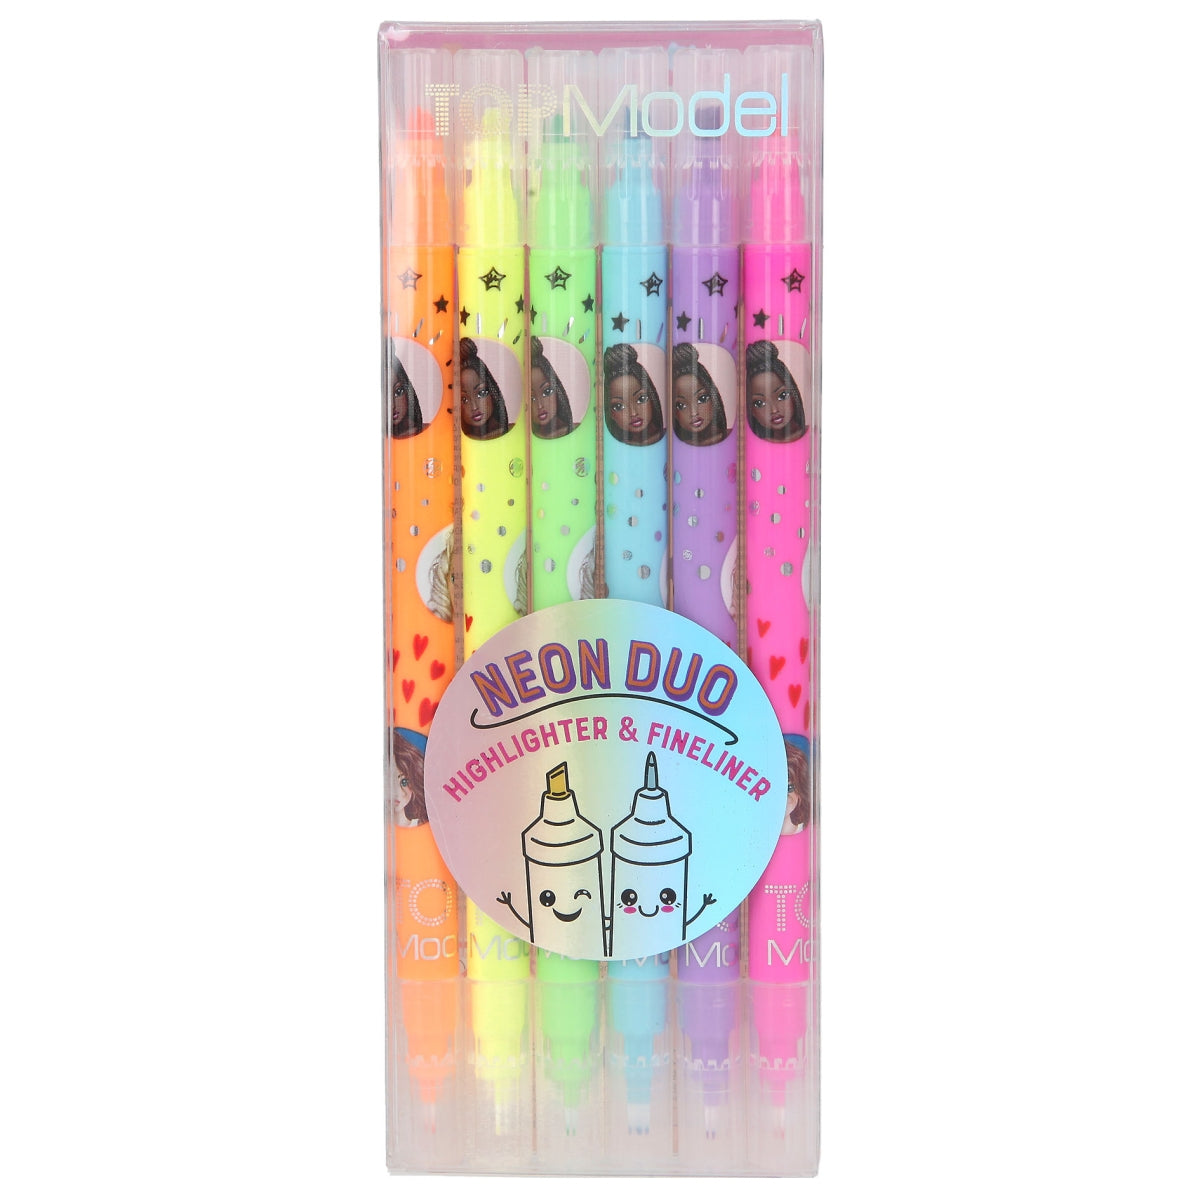 TOP Model Double Highlighter & Fineliner Pens